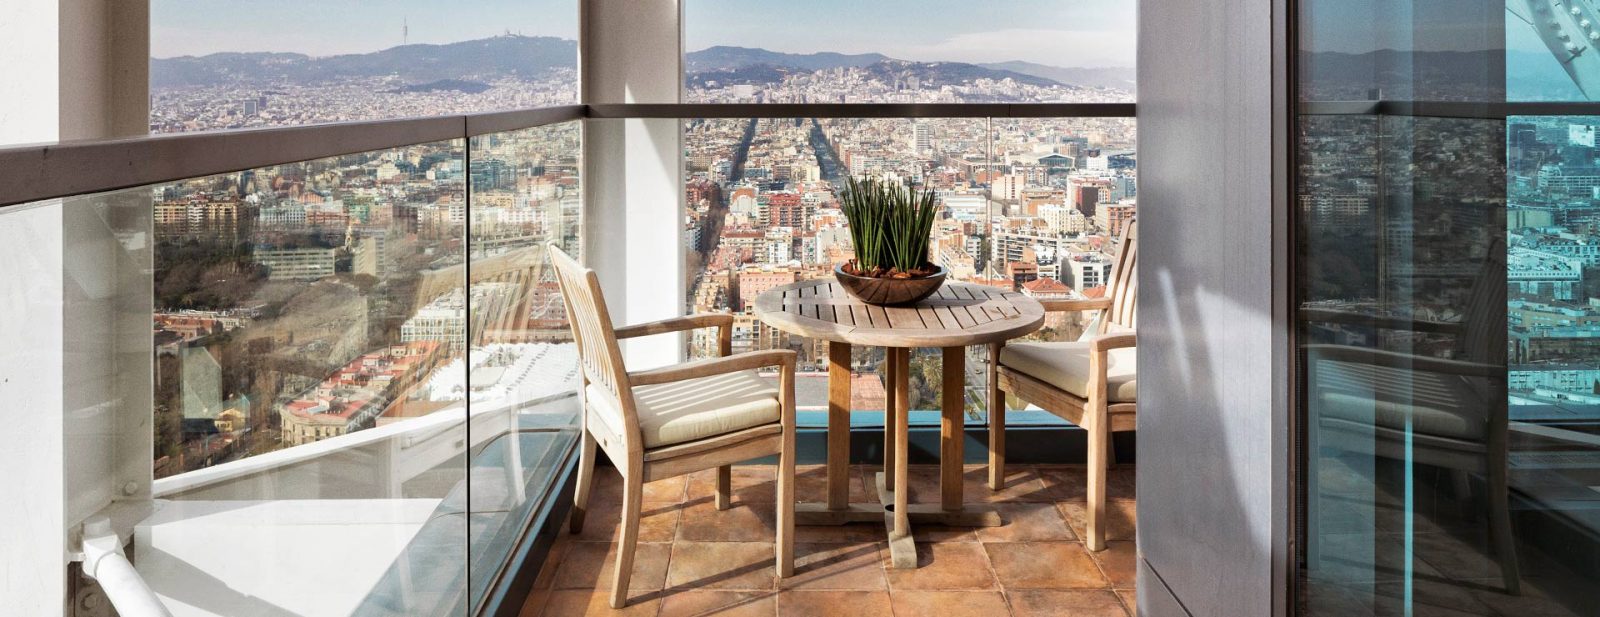 The Barcelona Penthouse